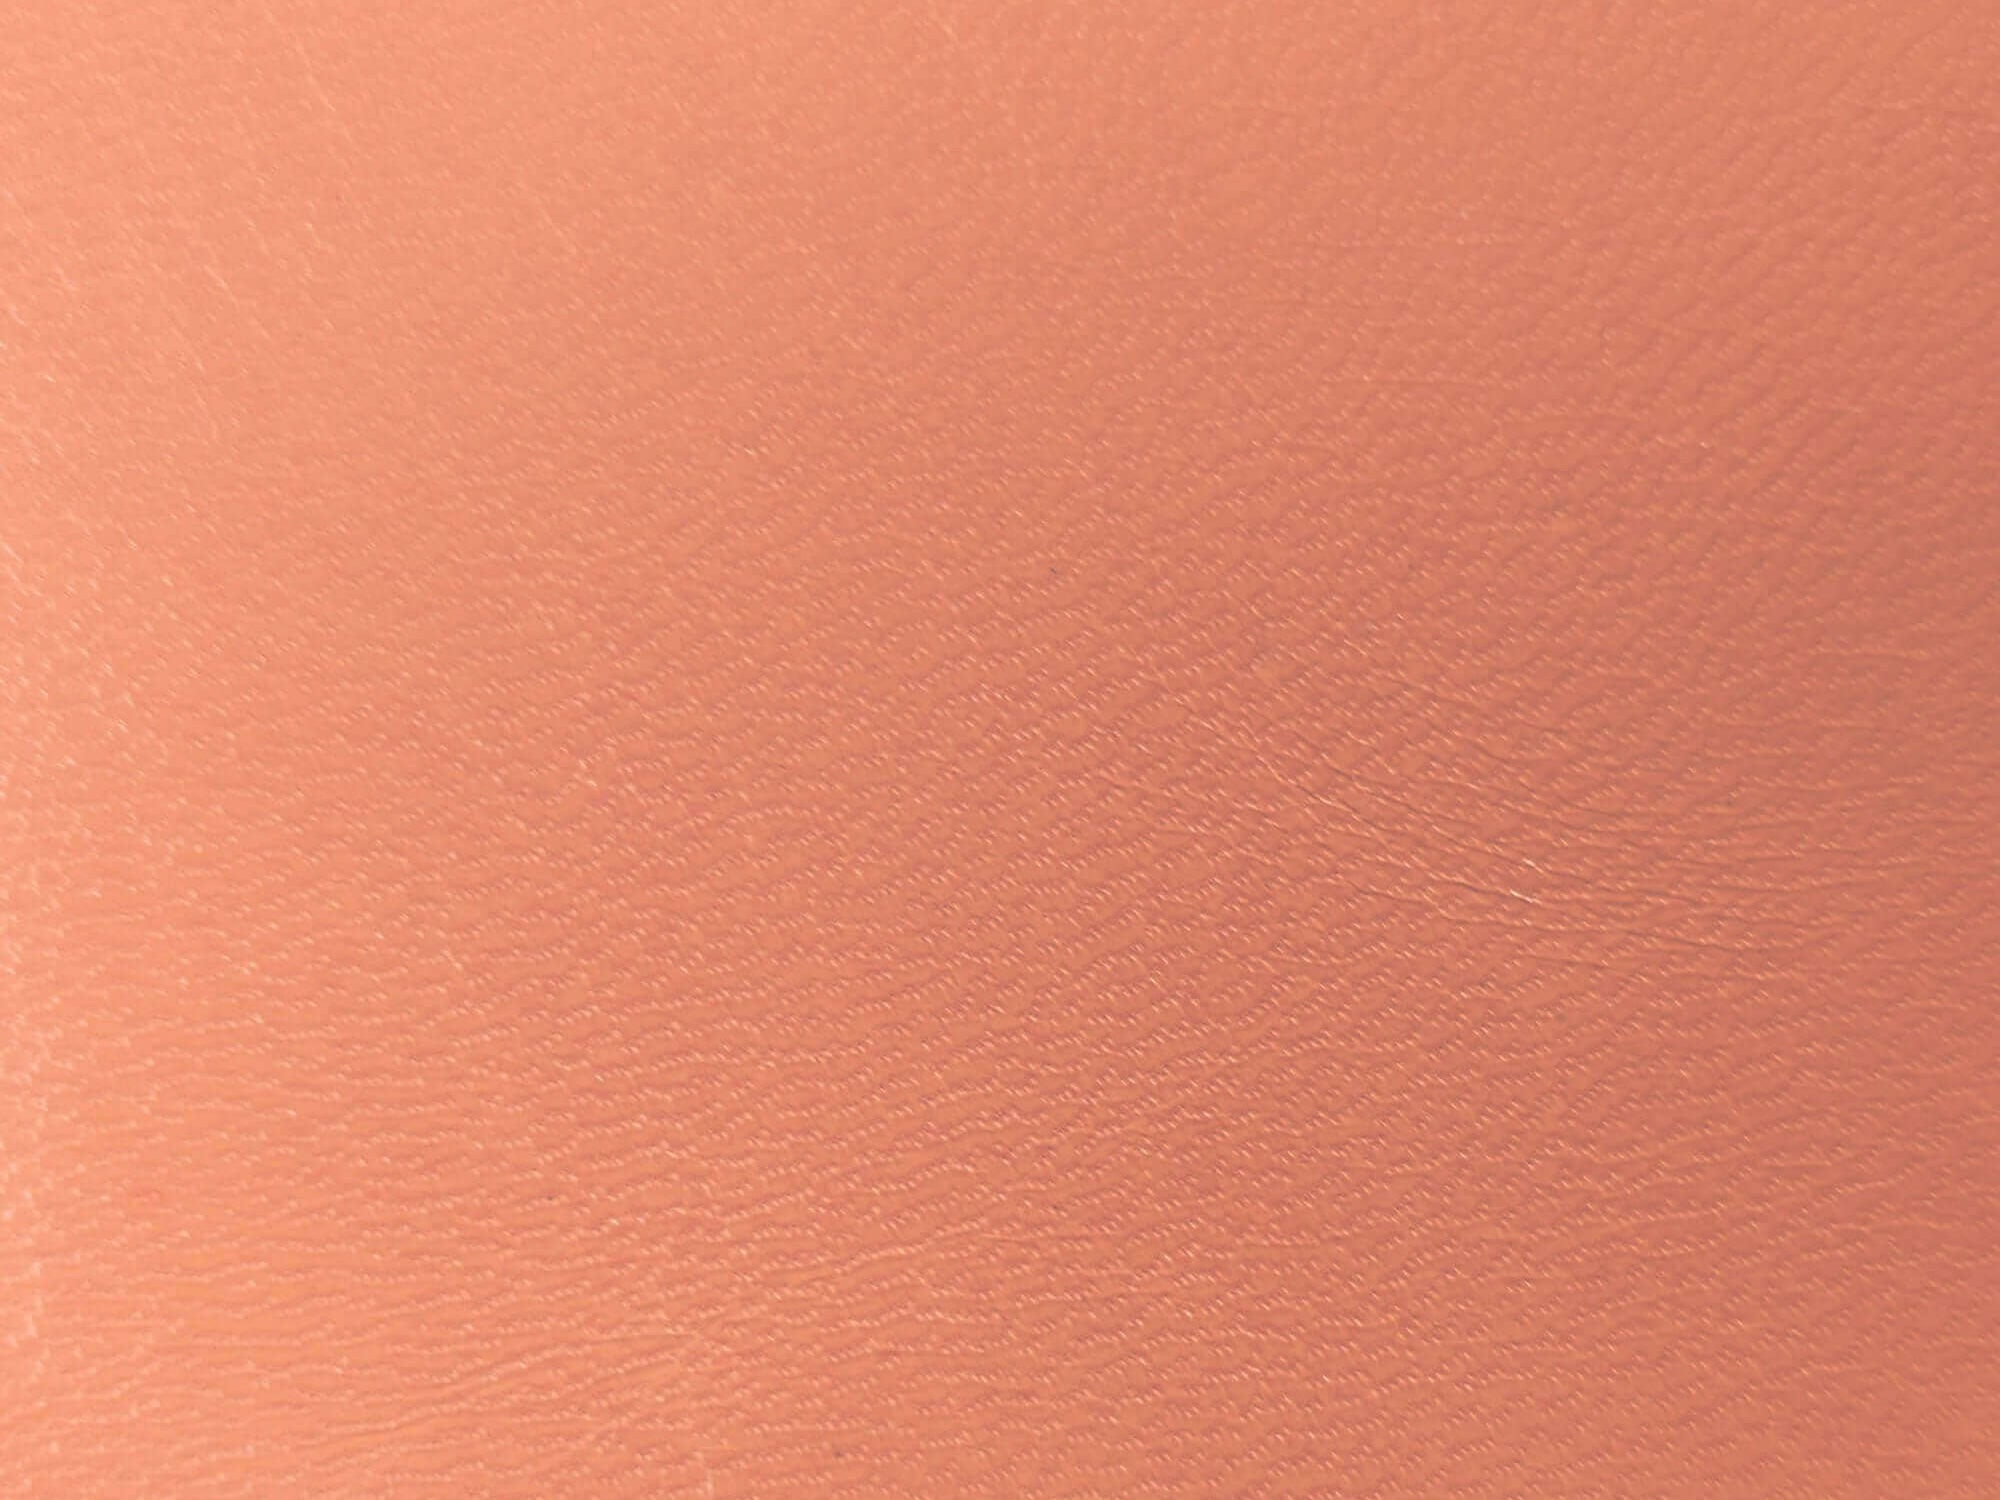 Closeup of Orange/Tan goatskin hide 2-3 sq. ft